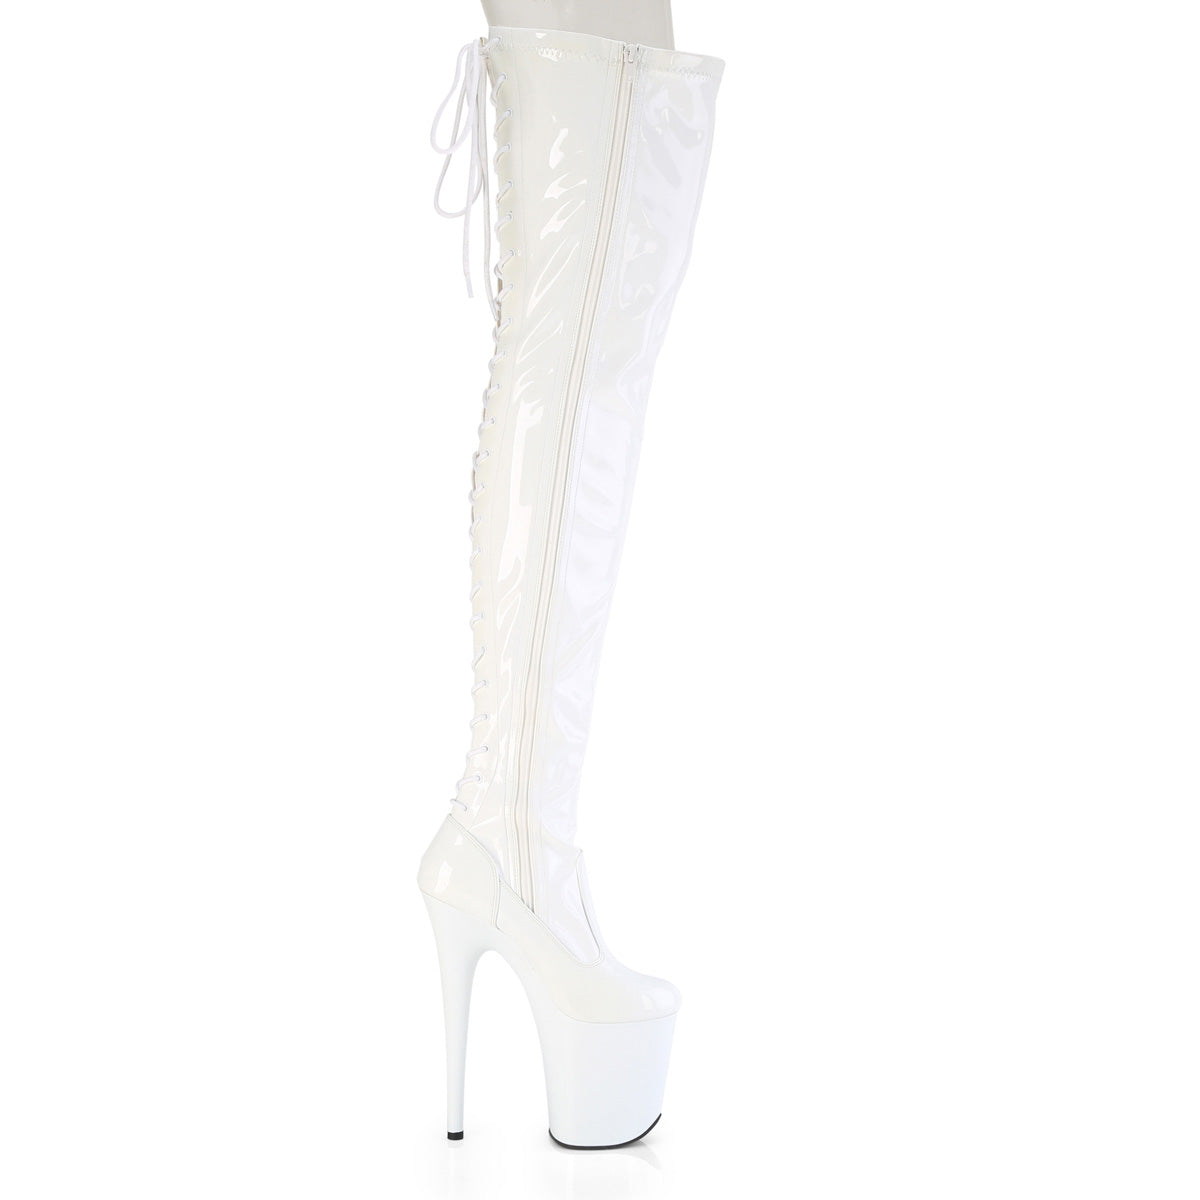 8 Inch Heel FLAMINGO-3850 White Patent